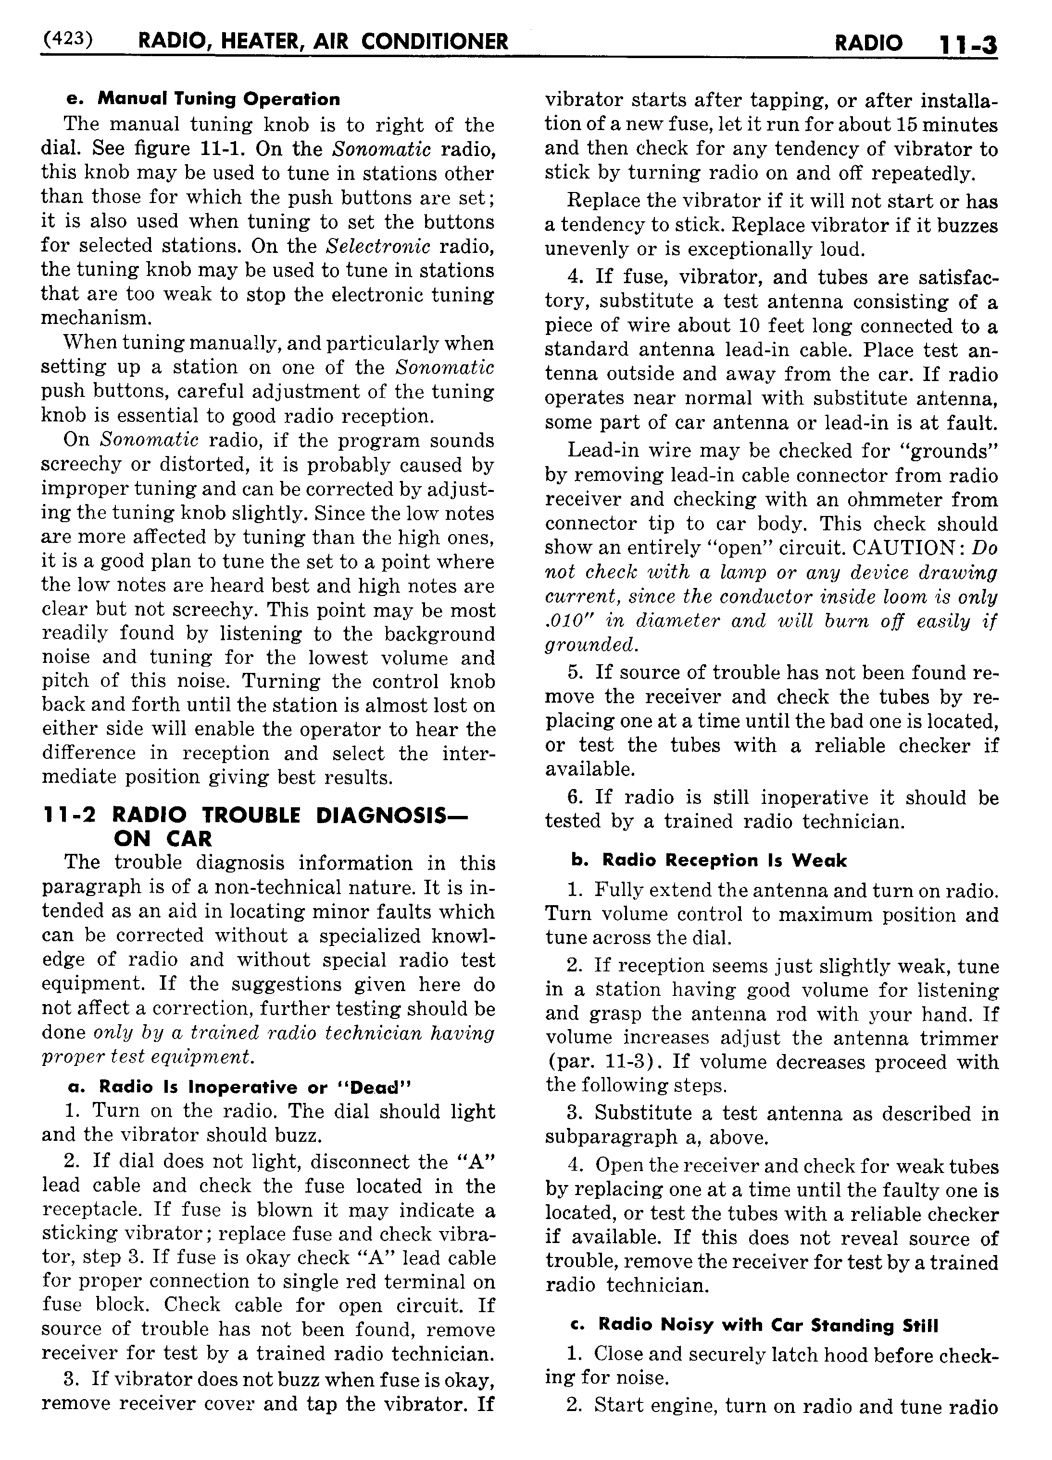 n_12 1956 Buick Shop Manual - Radio-Heater-AC-003-003.jpg